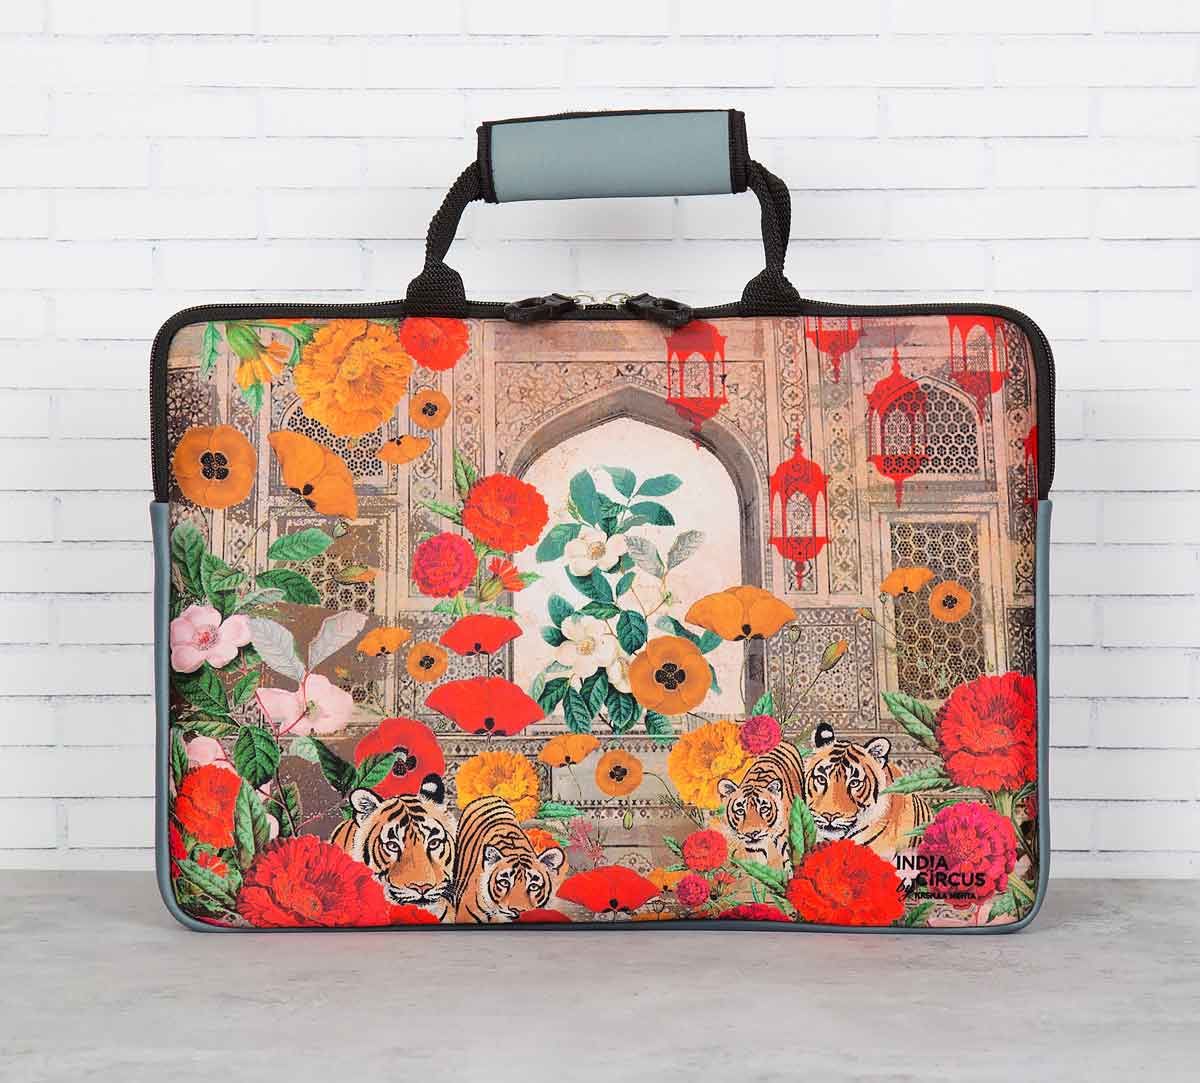 India Circus Floral Burst Laptop Sleeve and Bag